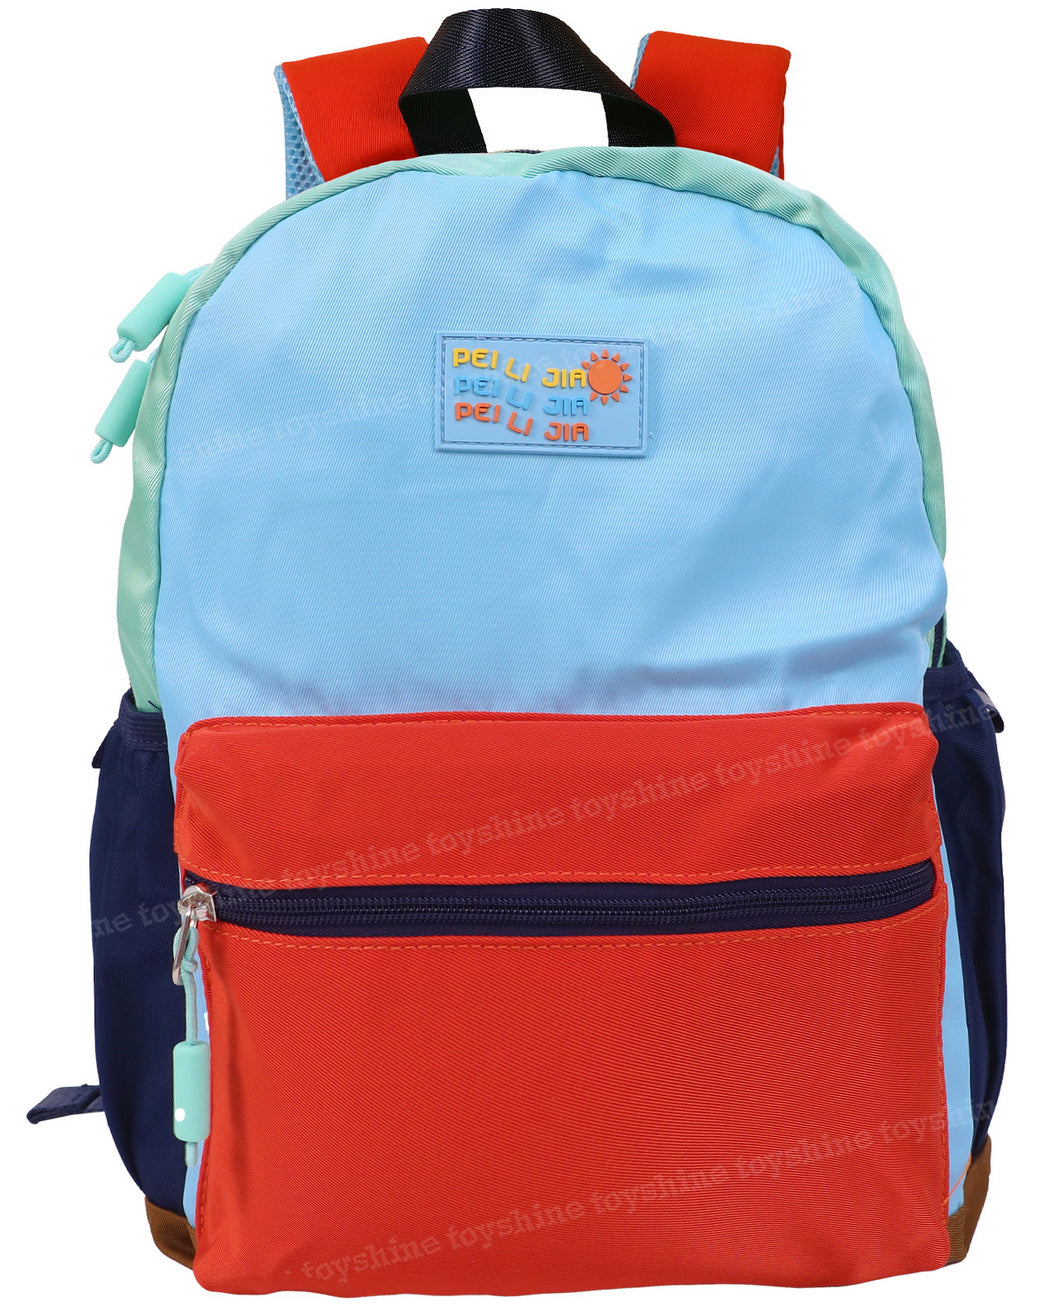 Toyshine High School Backpacks for Teen Girls Boys, Cute Book Bags for kids - BLUE